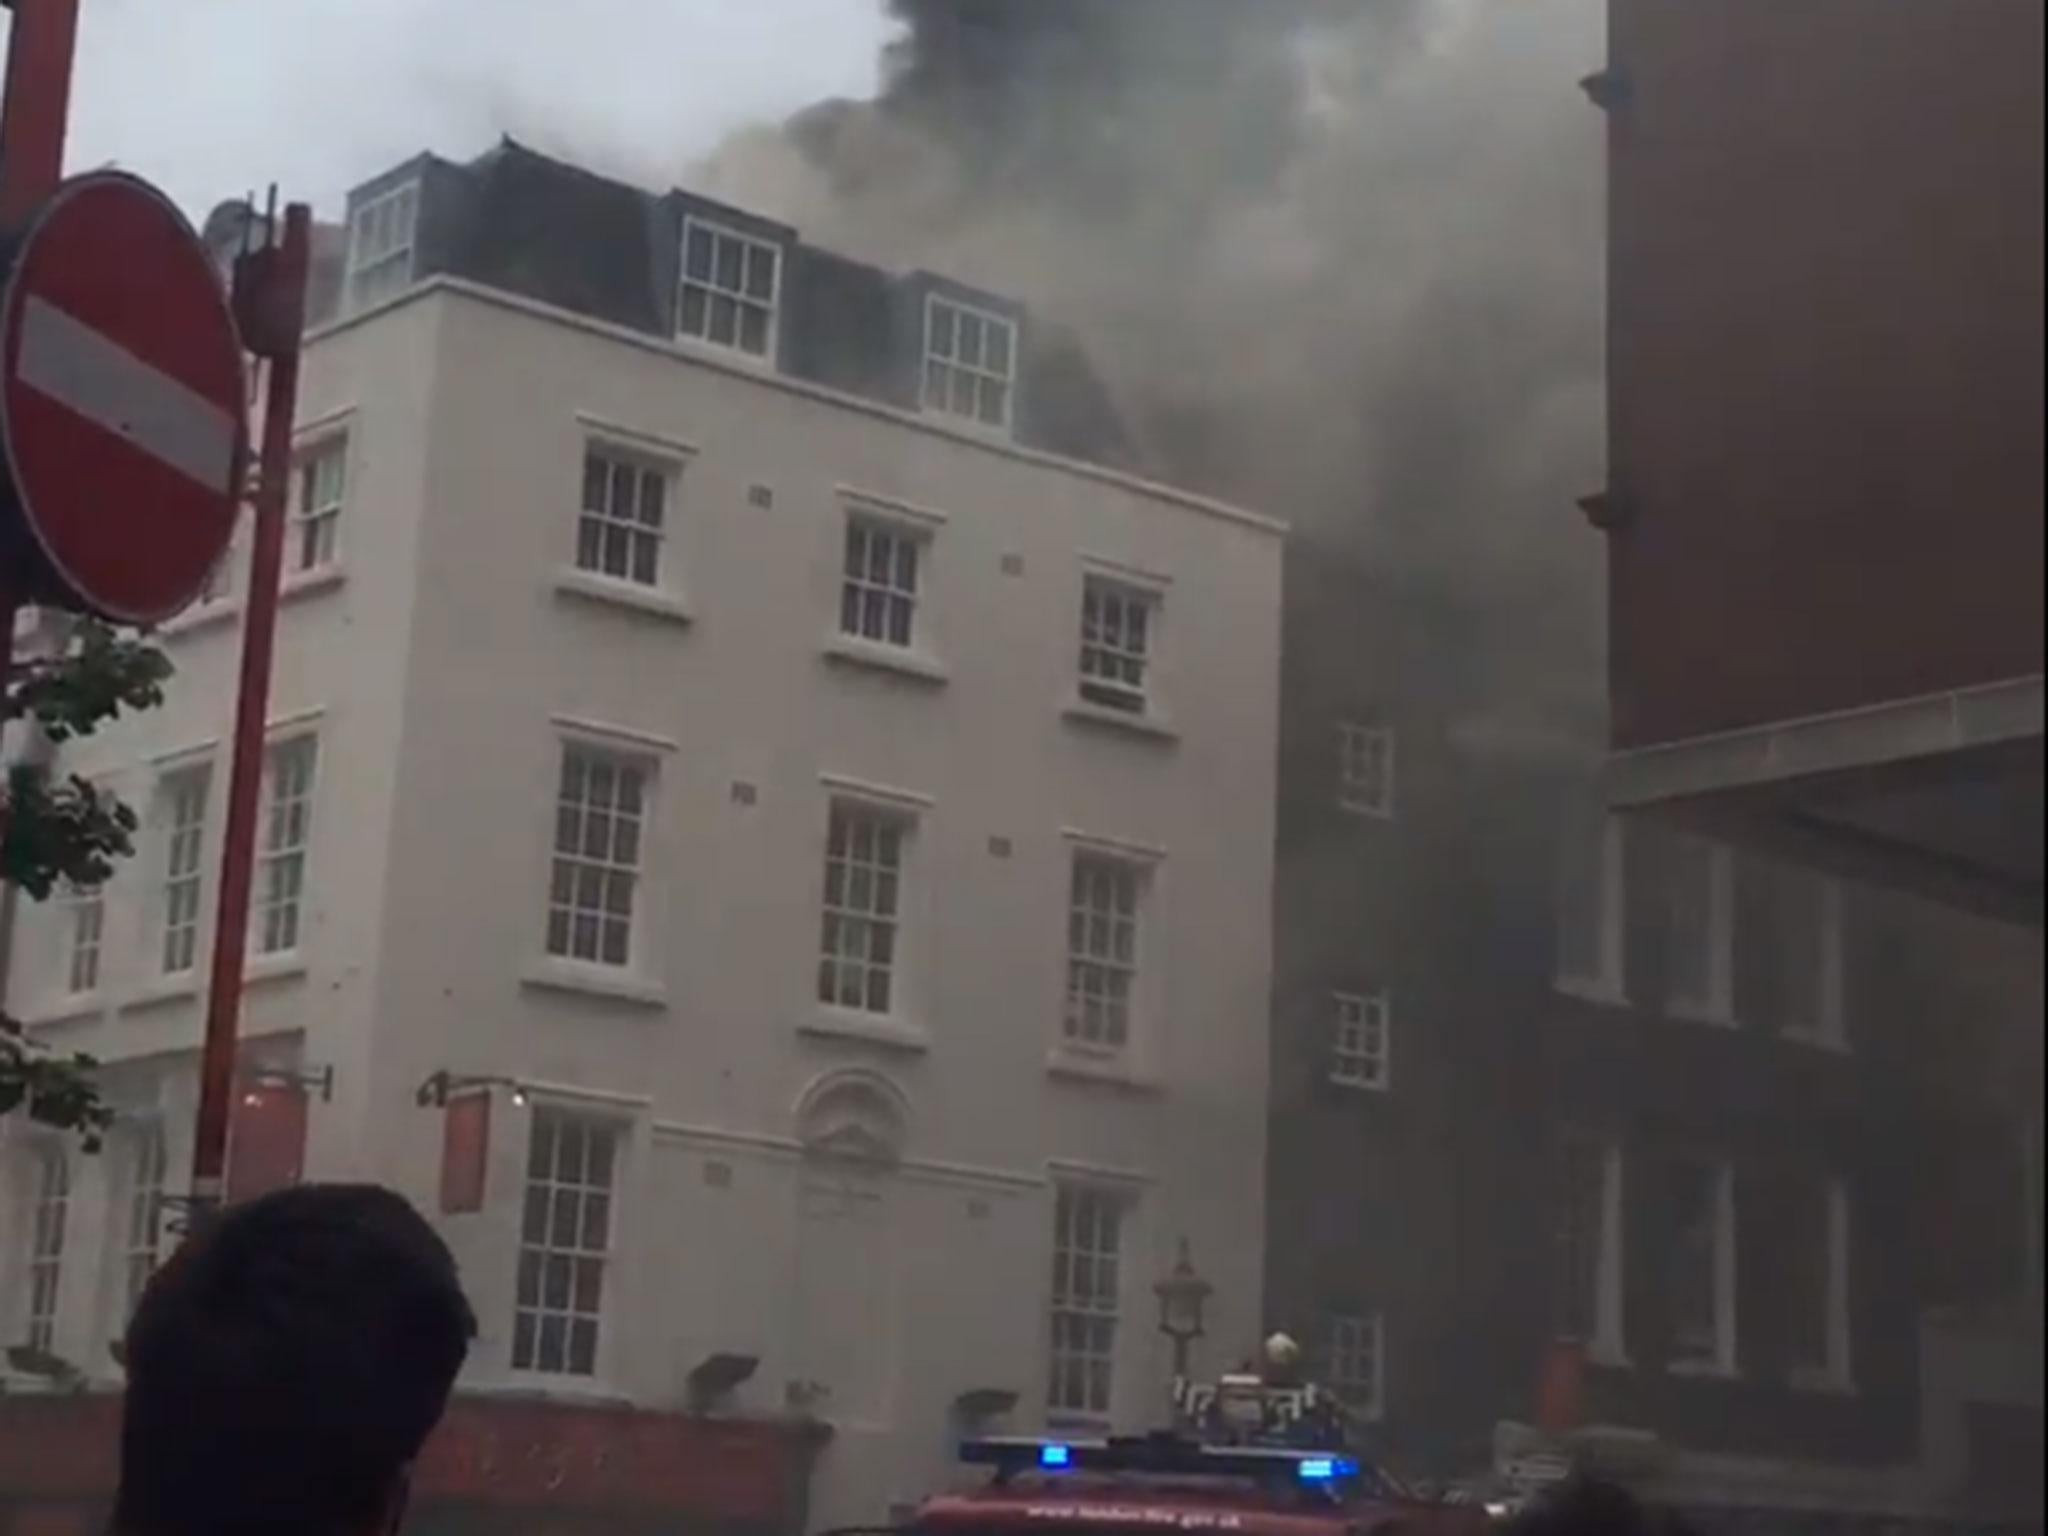 Firefighters fought the blaze at a restaurant in Gerrard Street, Soho